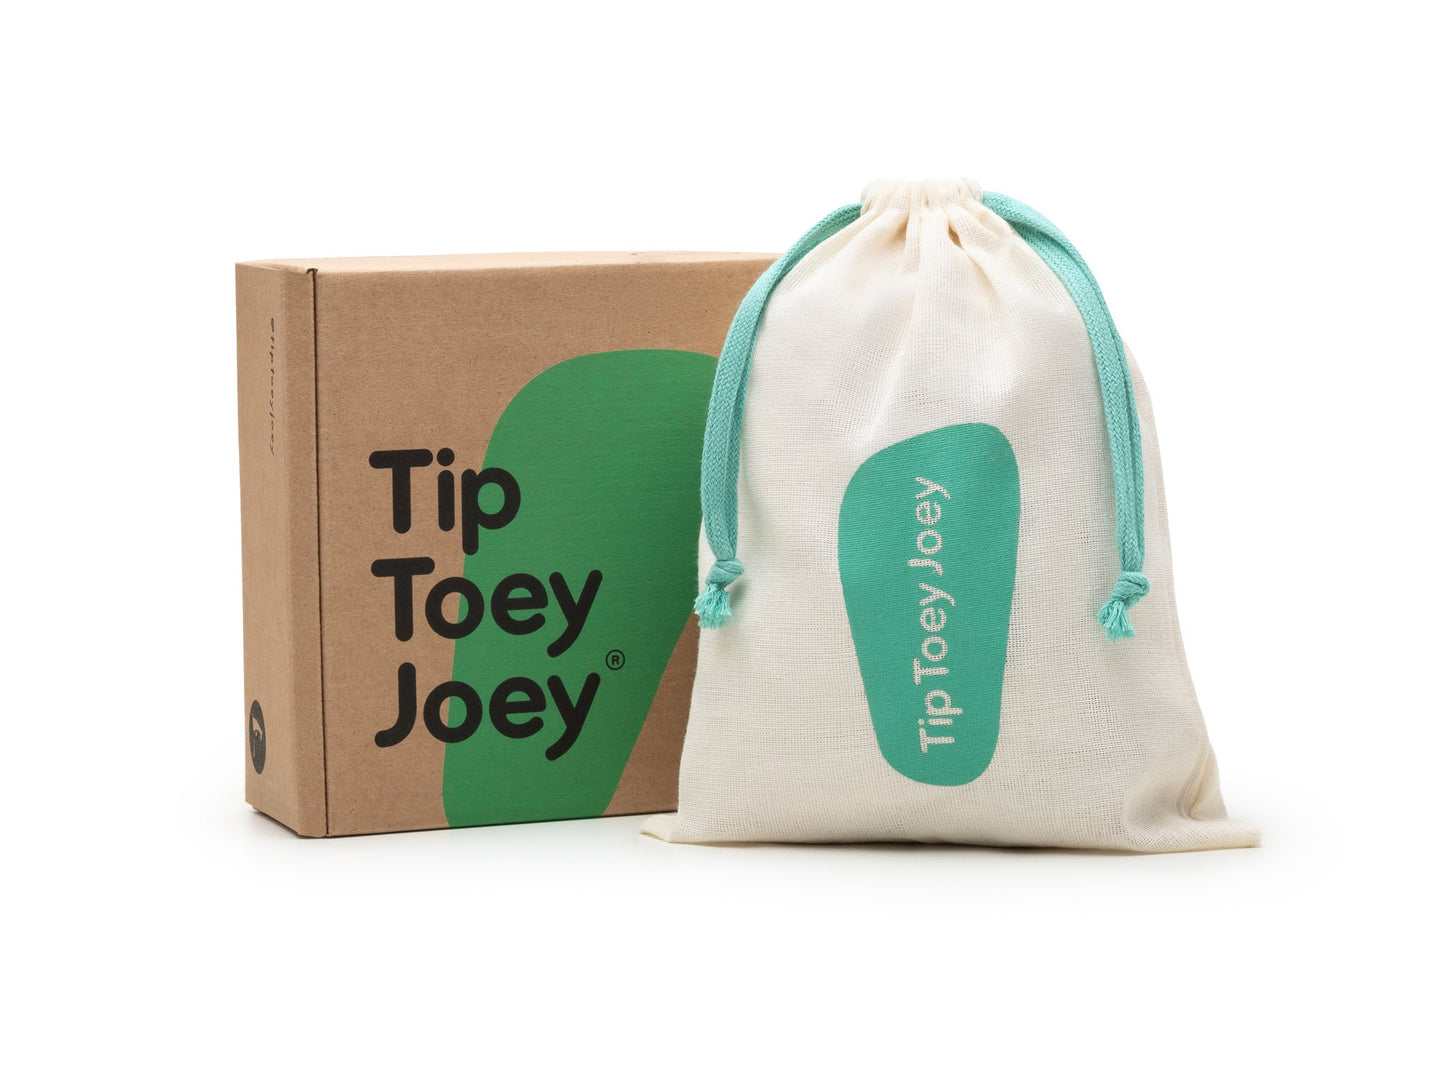 Tip Toey Joey - Sandálias Parky Papaya